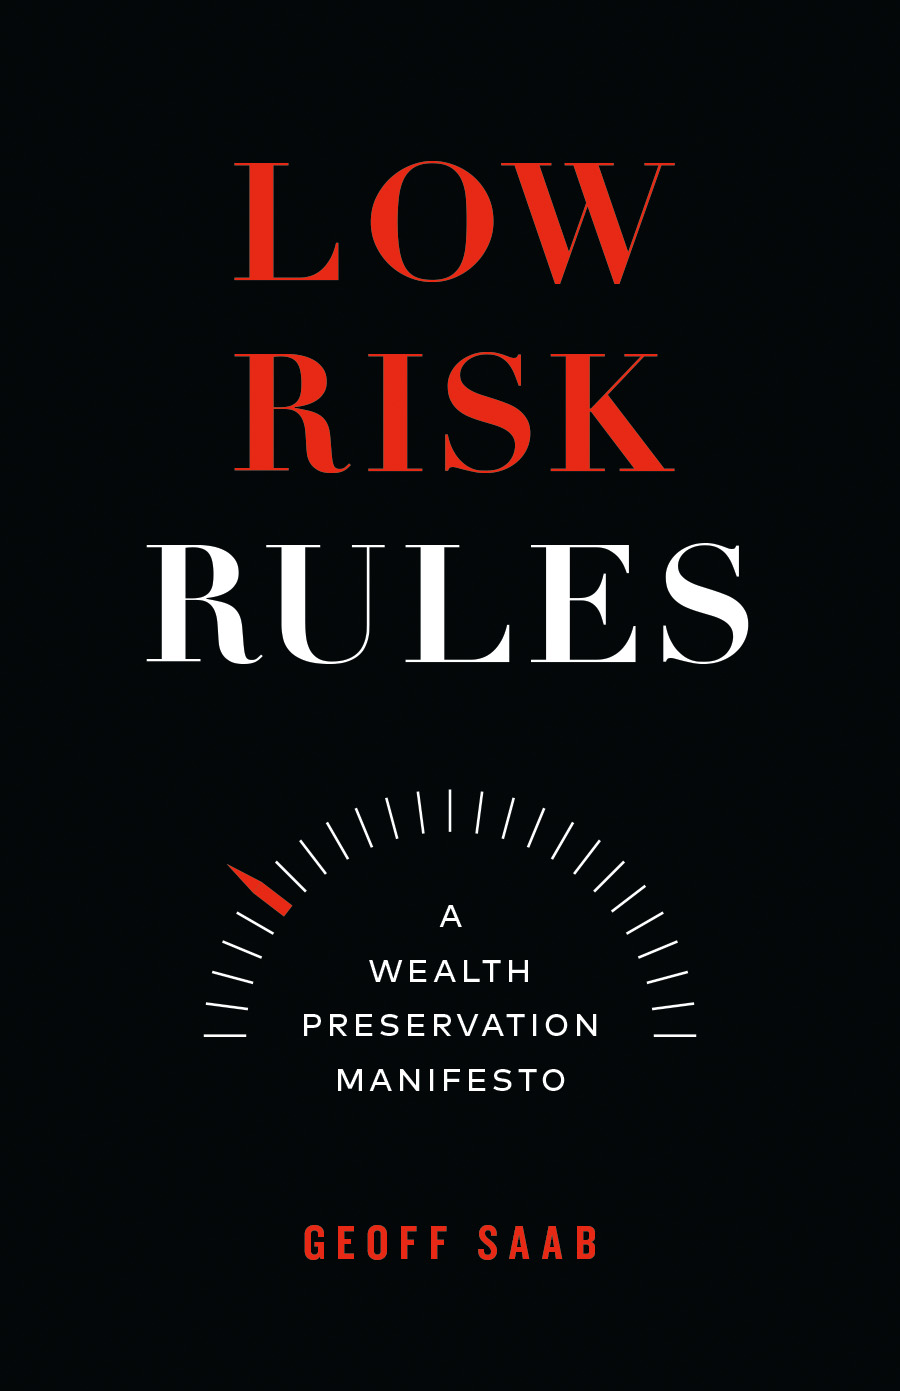 Low Risk Rules by Geoff Saab